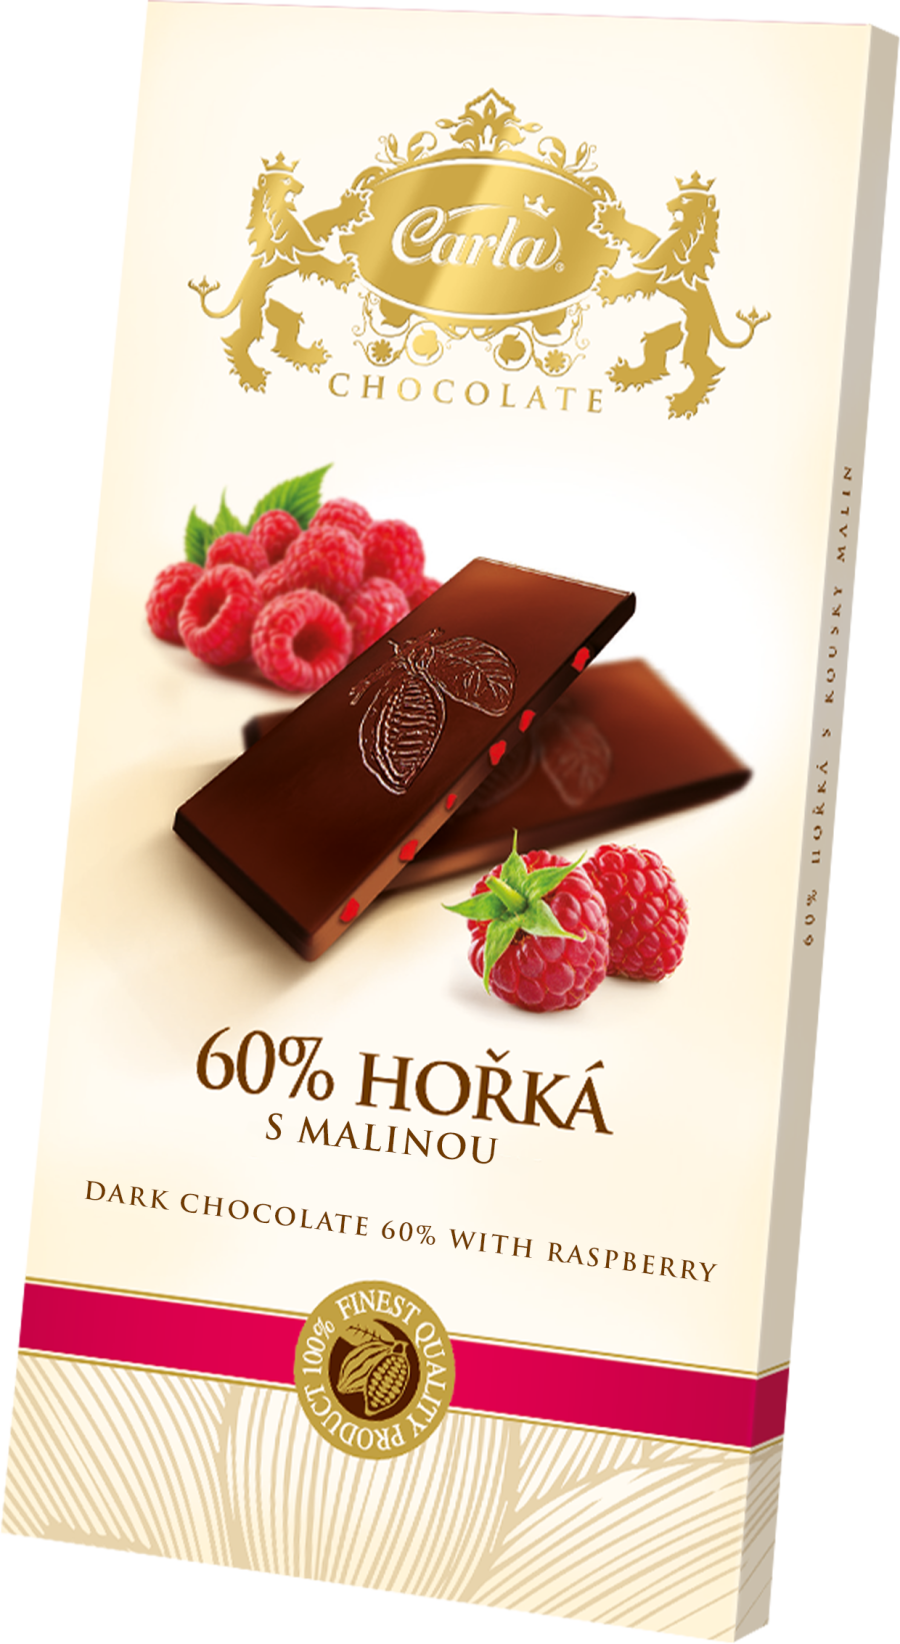 Dark chocolate 60% with raspberry - Carla